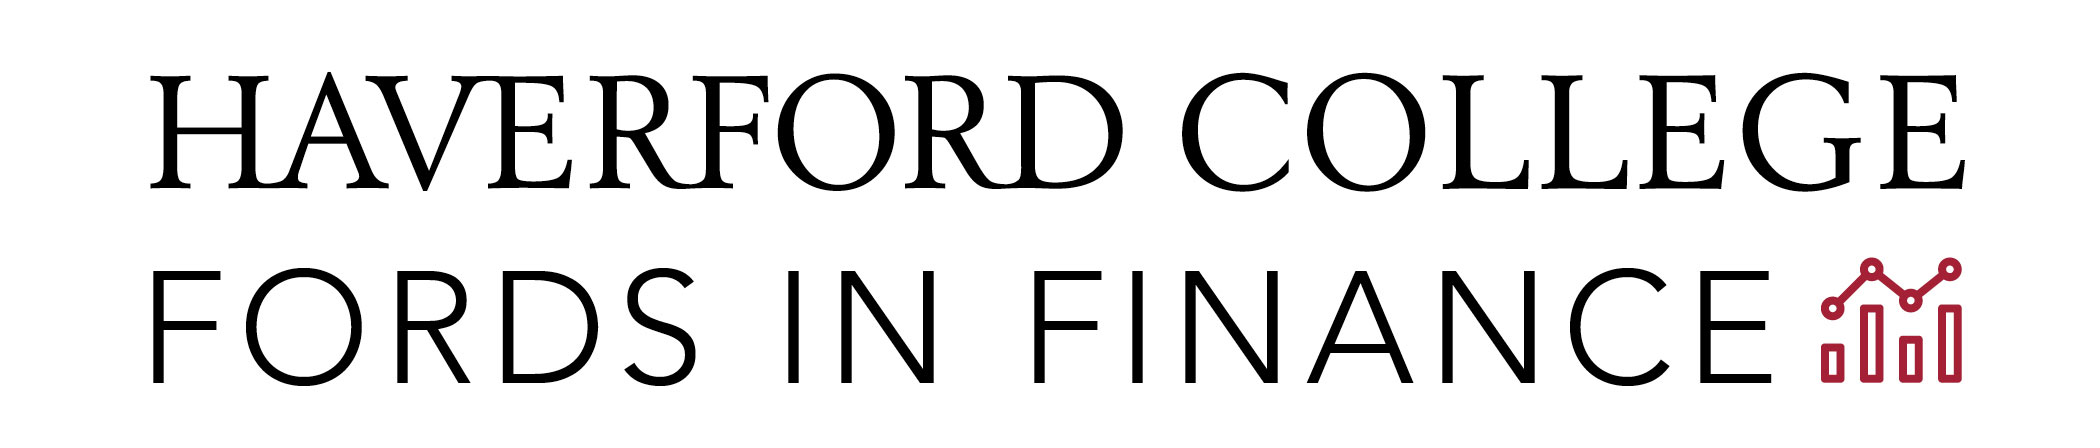 Fords in Finance logo